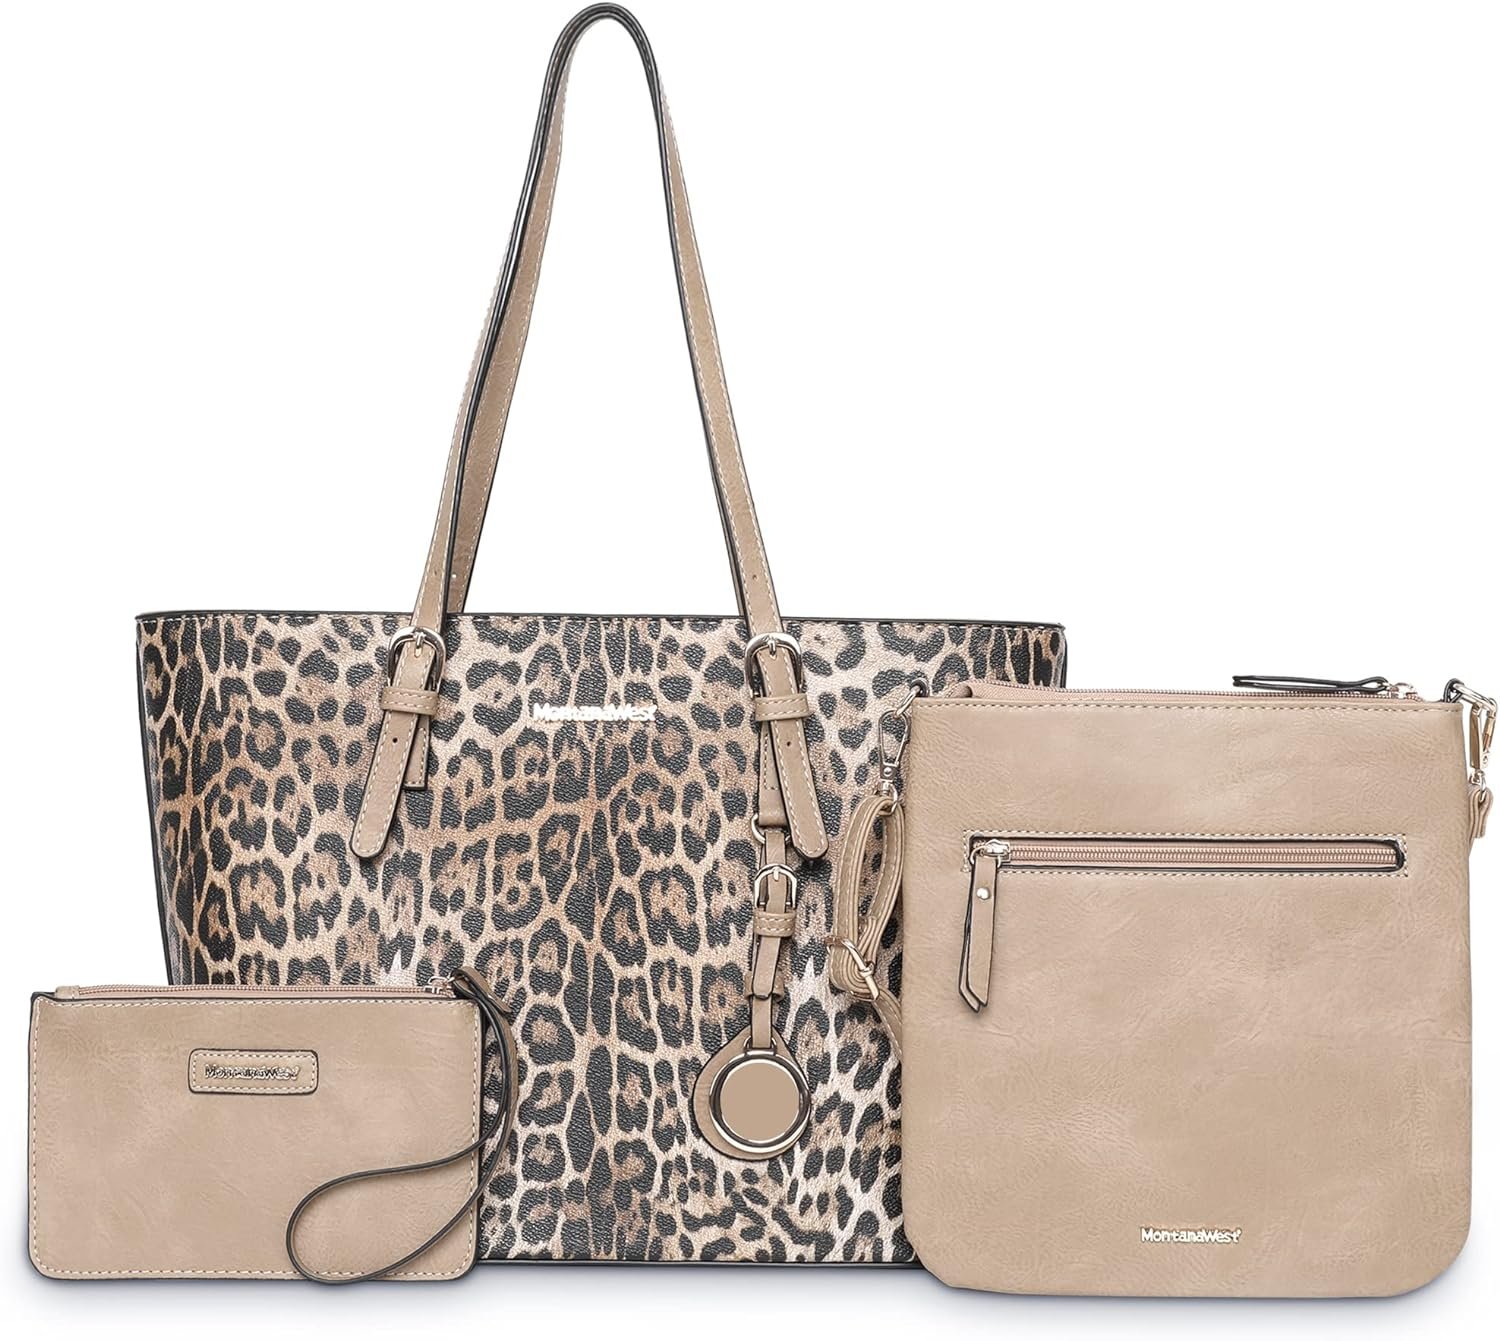 Montana West 3pcs Handbag Set Leopard Print Tote Bag for Women